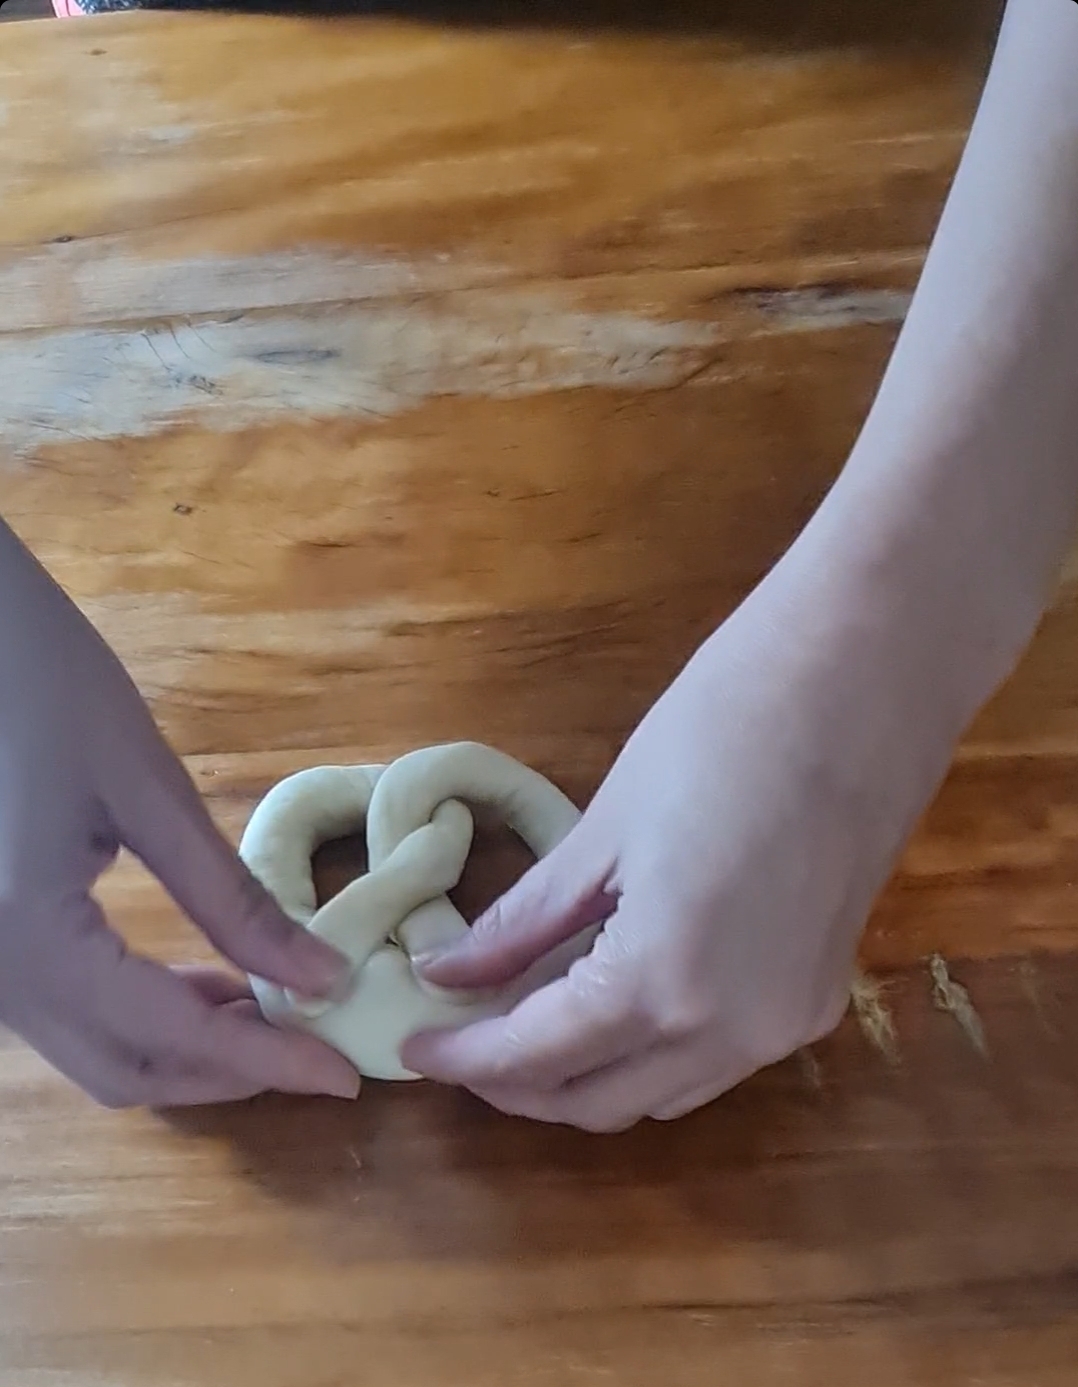 formato final do pretzel